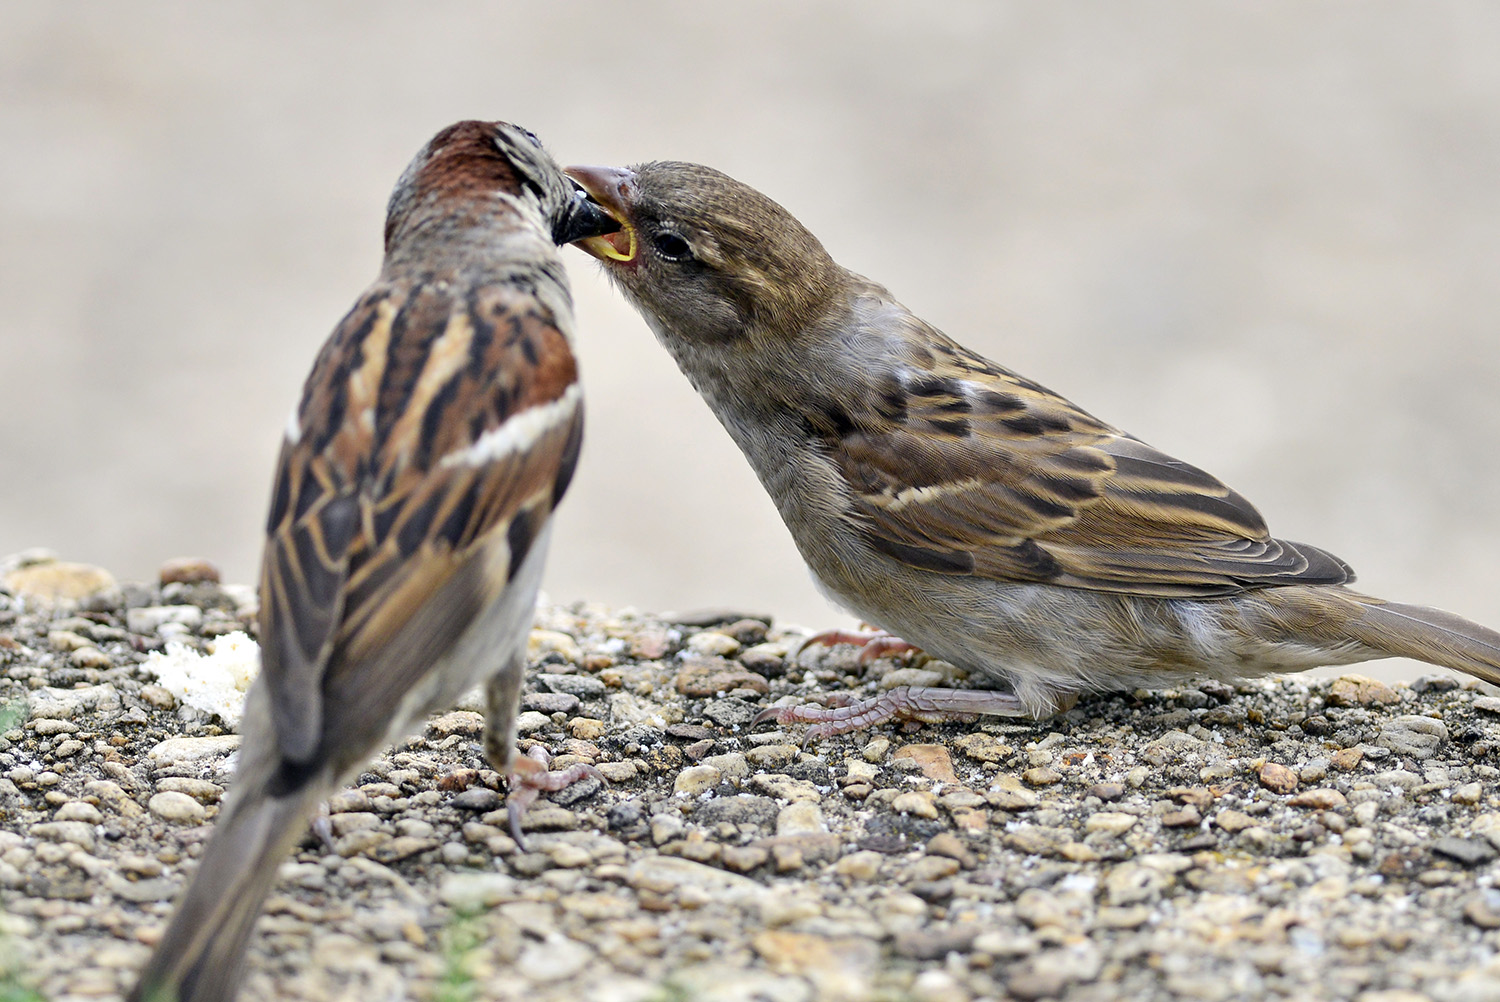 House_Sparrow_Parent_Feeding_Baby_Bird_Fledgling.jpg